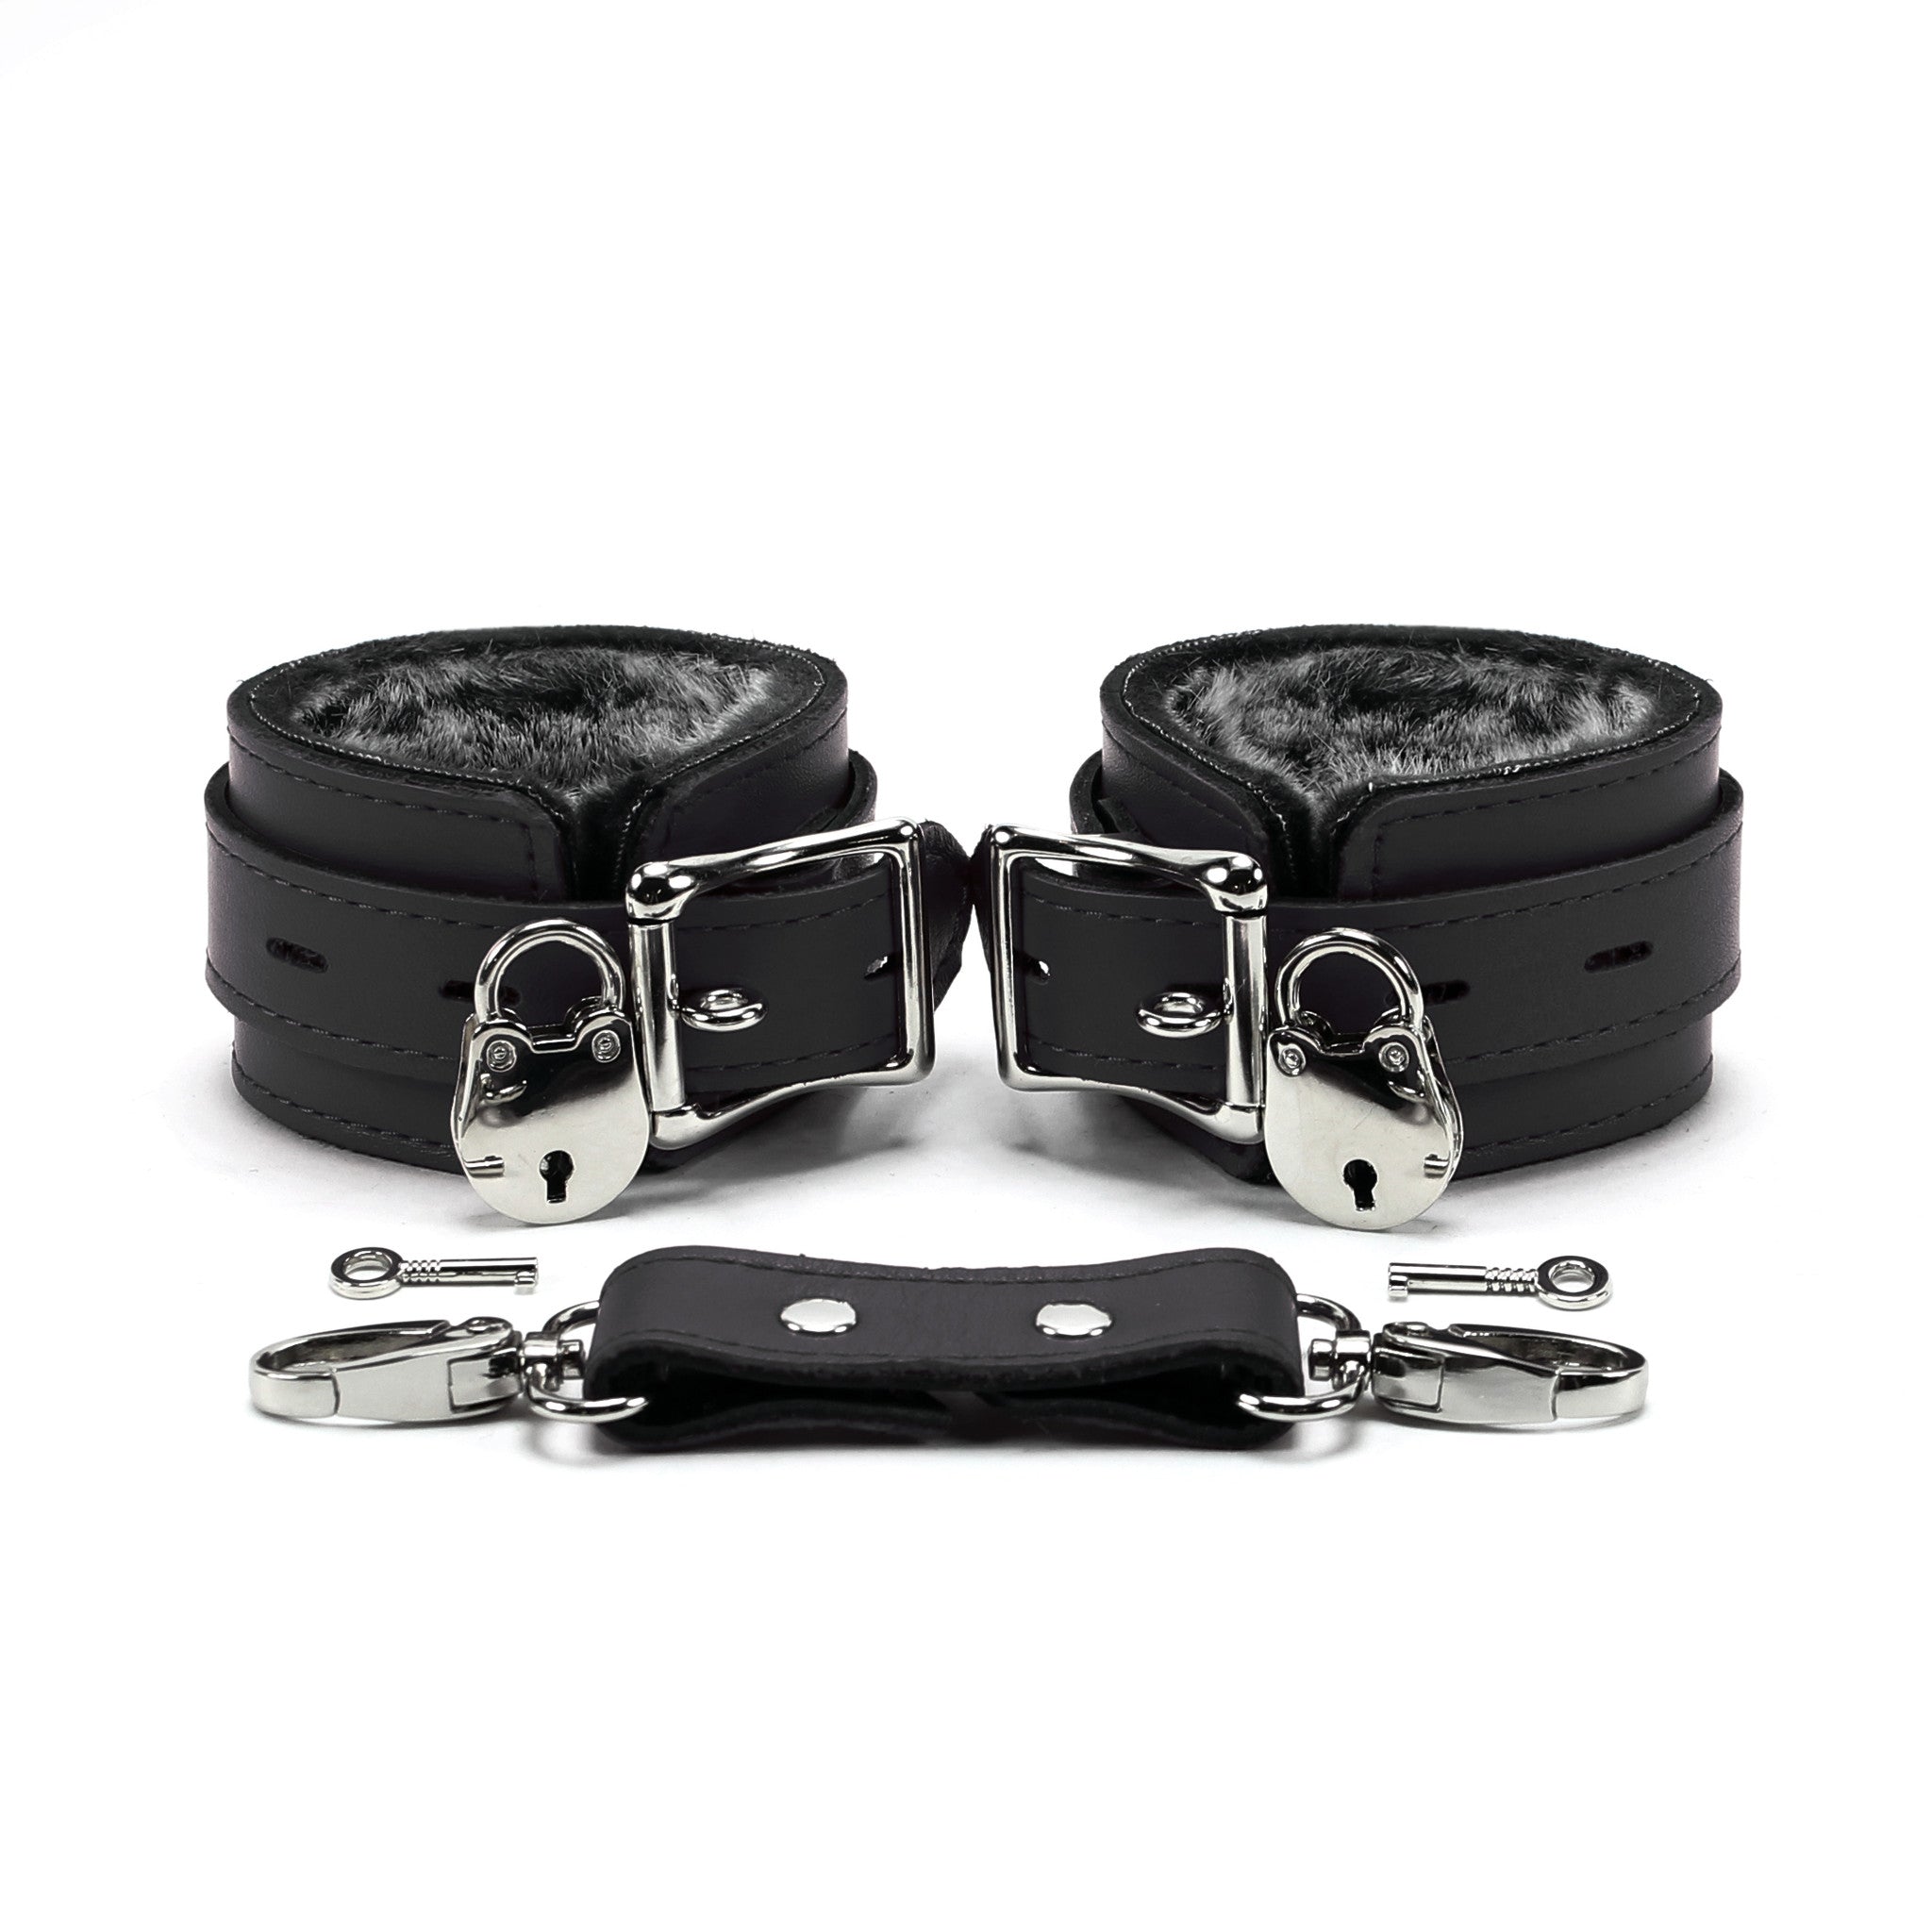 Berlin Lockable Leather BDSM Cuffs Black